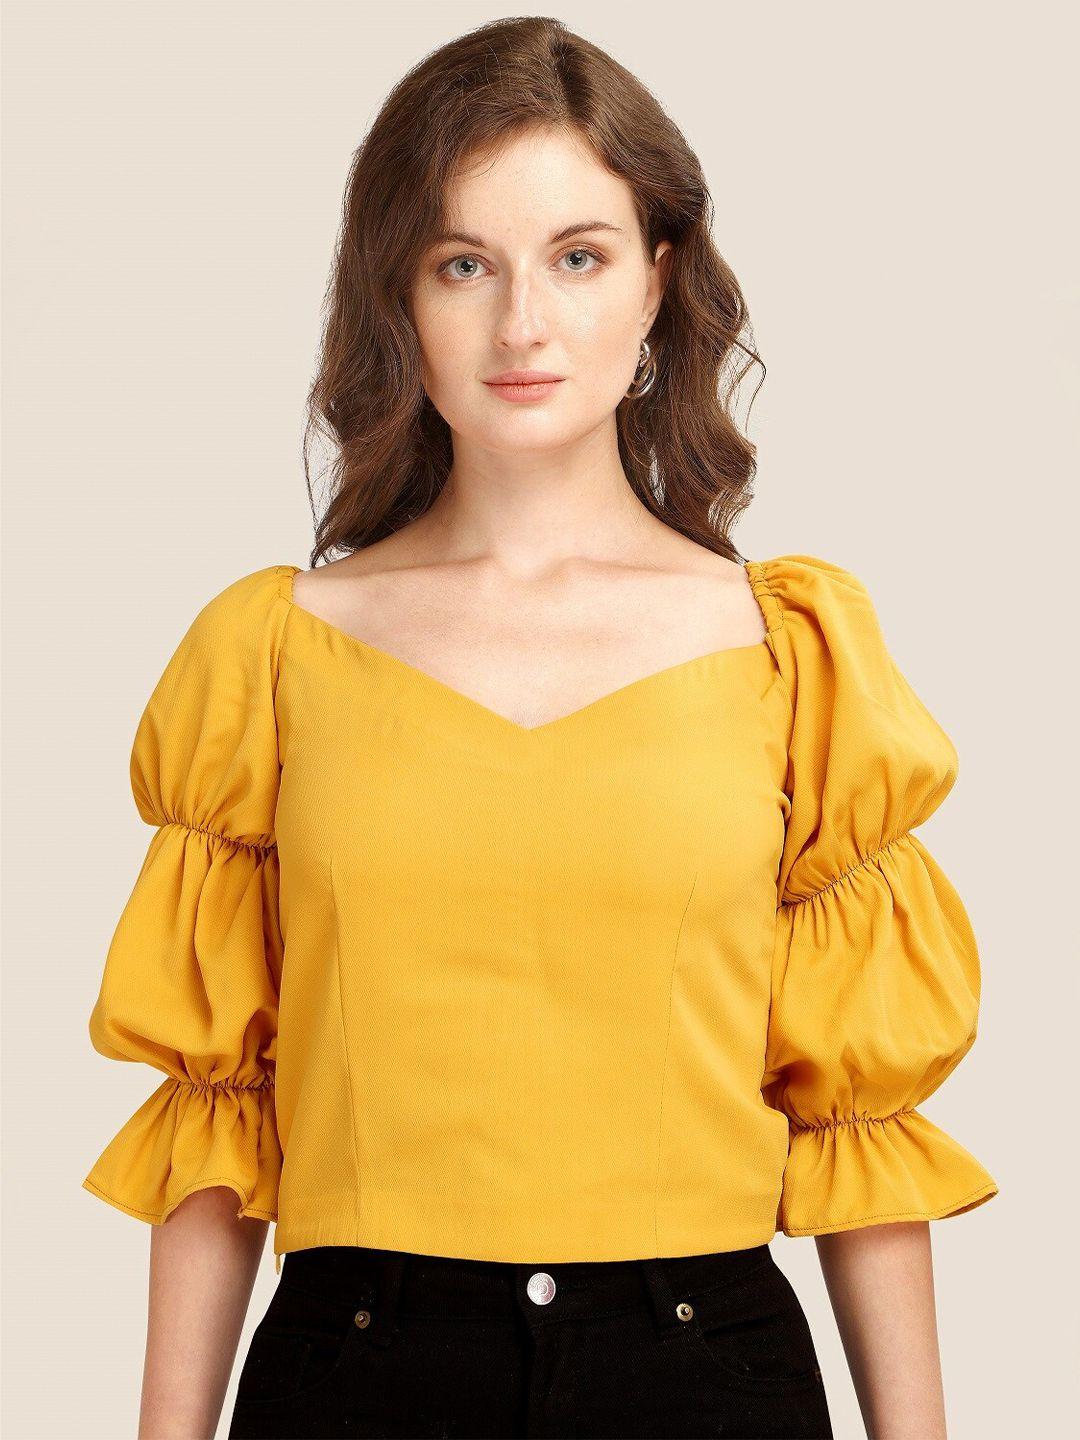 prettify woman mustard yellow sweetheart neck top